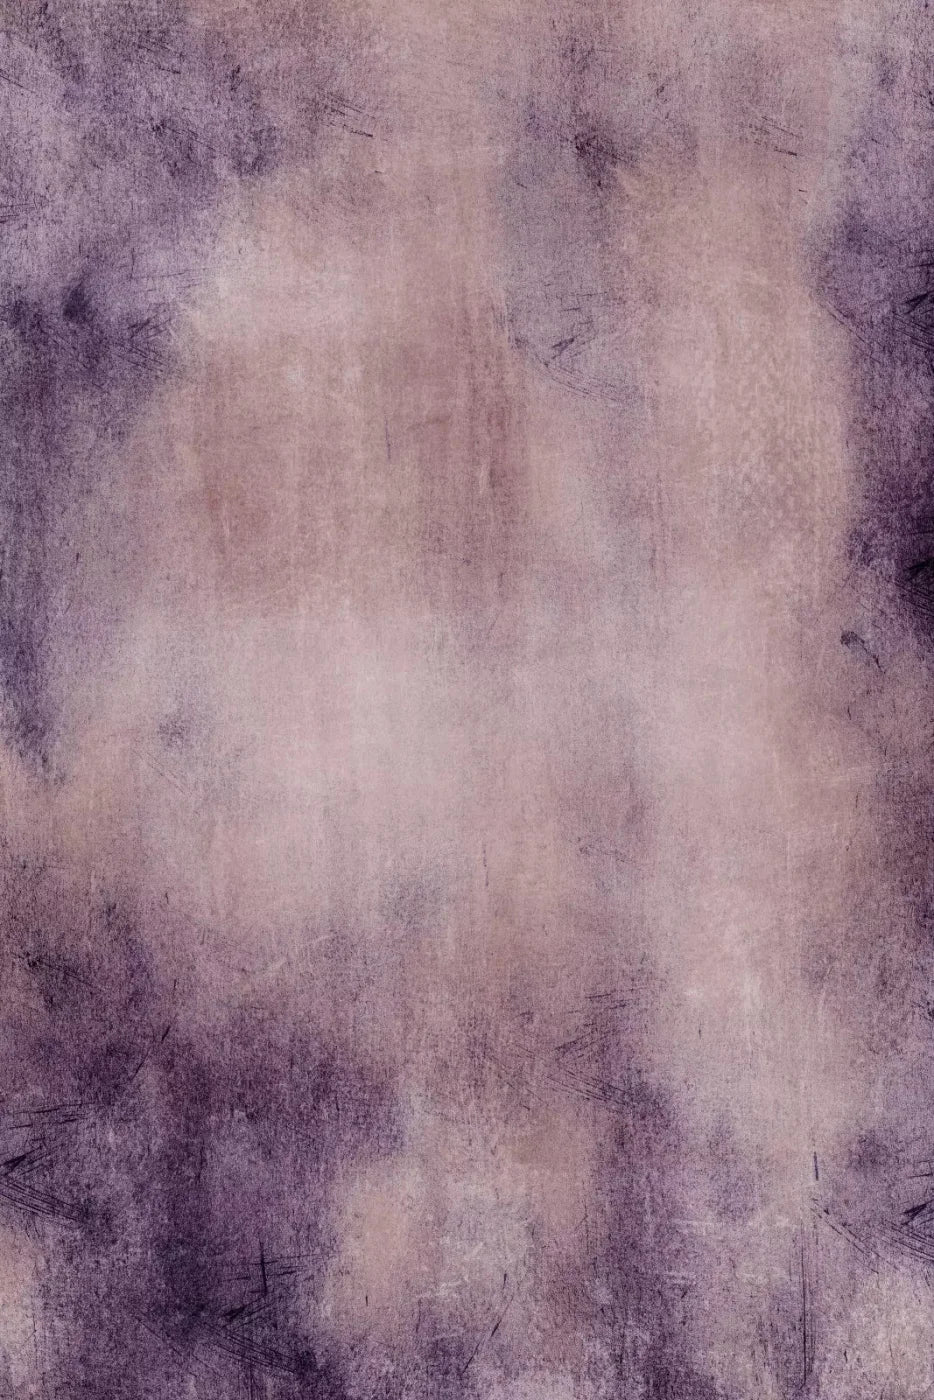 Lilac Essence 4X5 Rubbermat Floor ( 48 X 60 Inch ) Backdrop